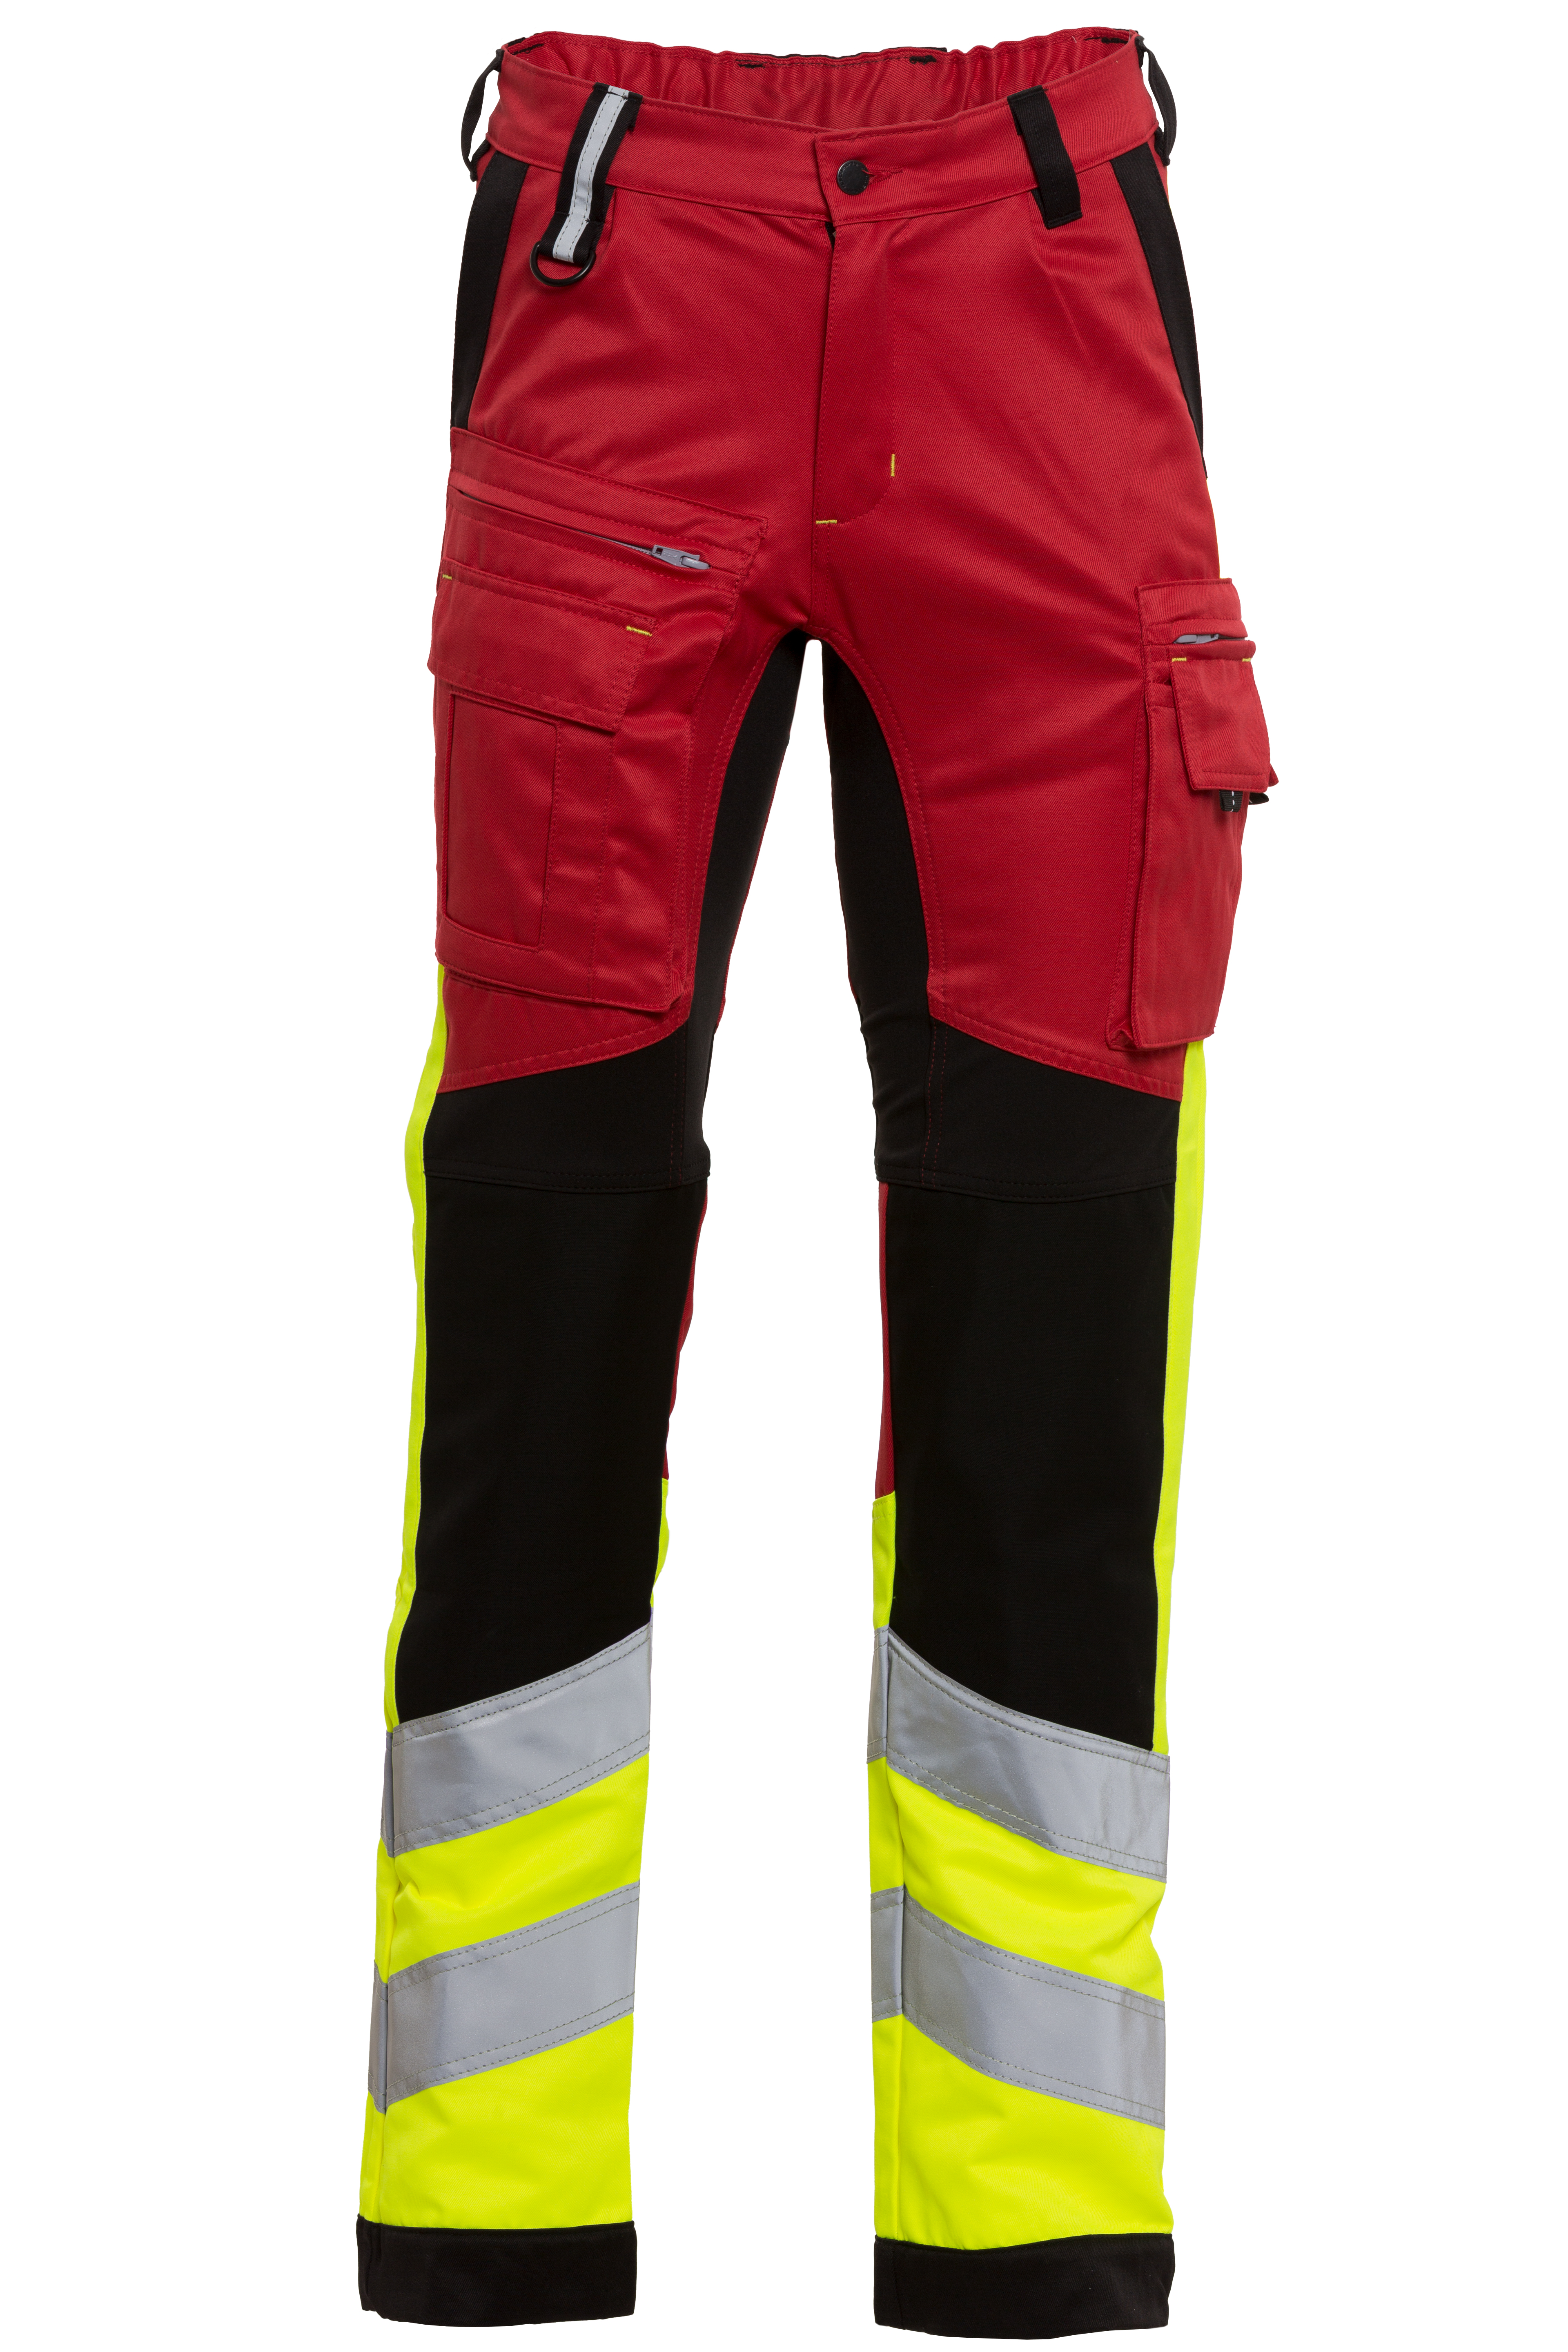 Rescuewear Unisex Hose 33416V2SW Stretch HiVis Klasse 1 Rot / Schwarz / Neon Gelb